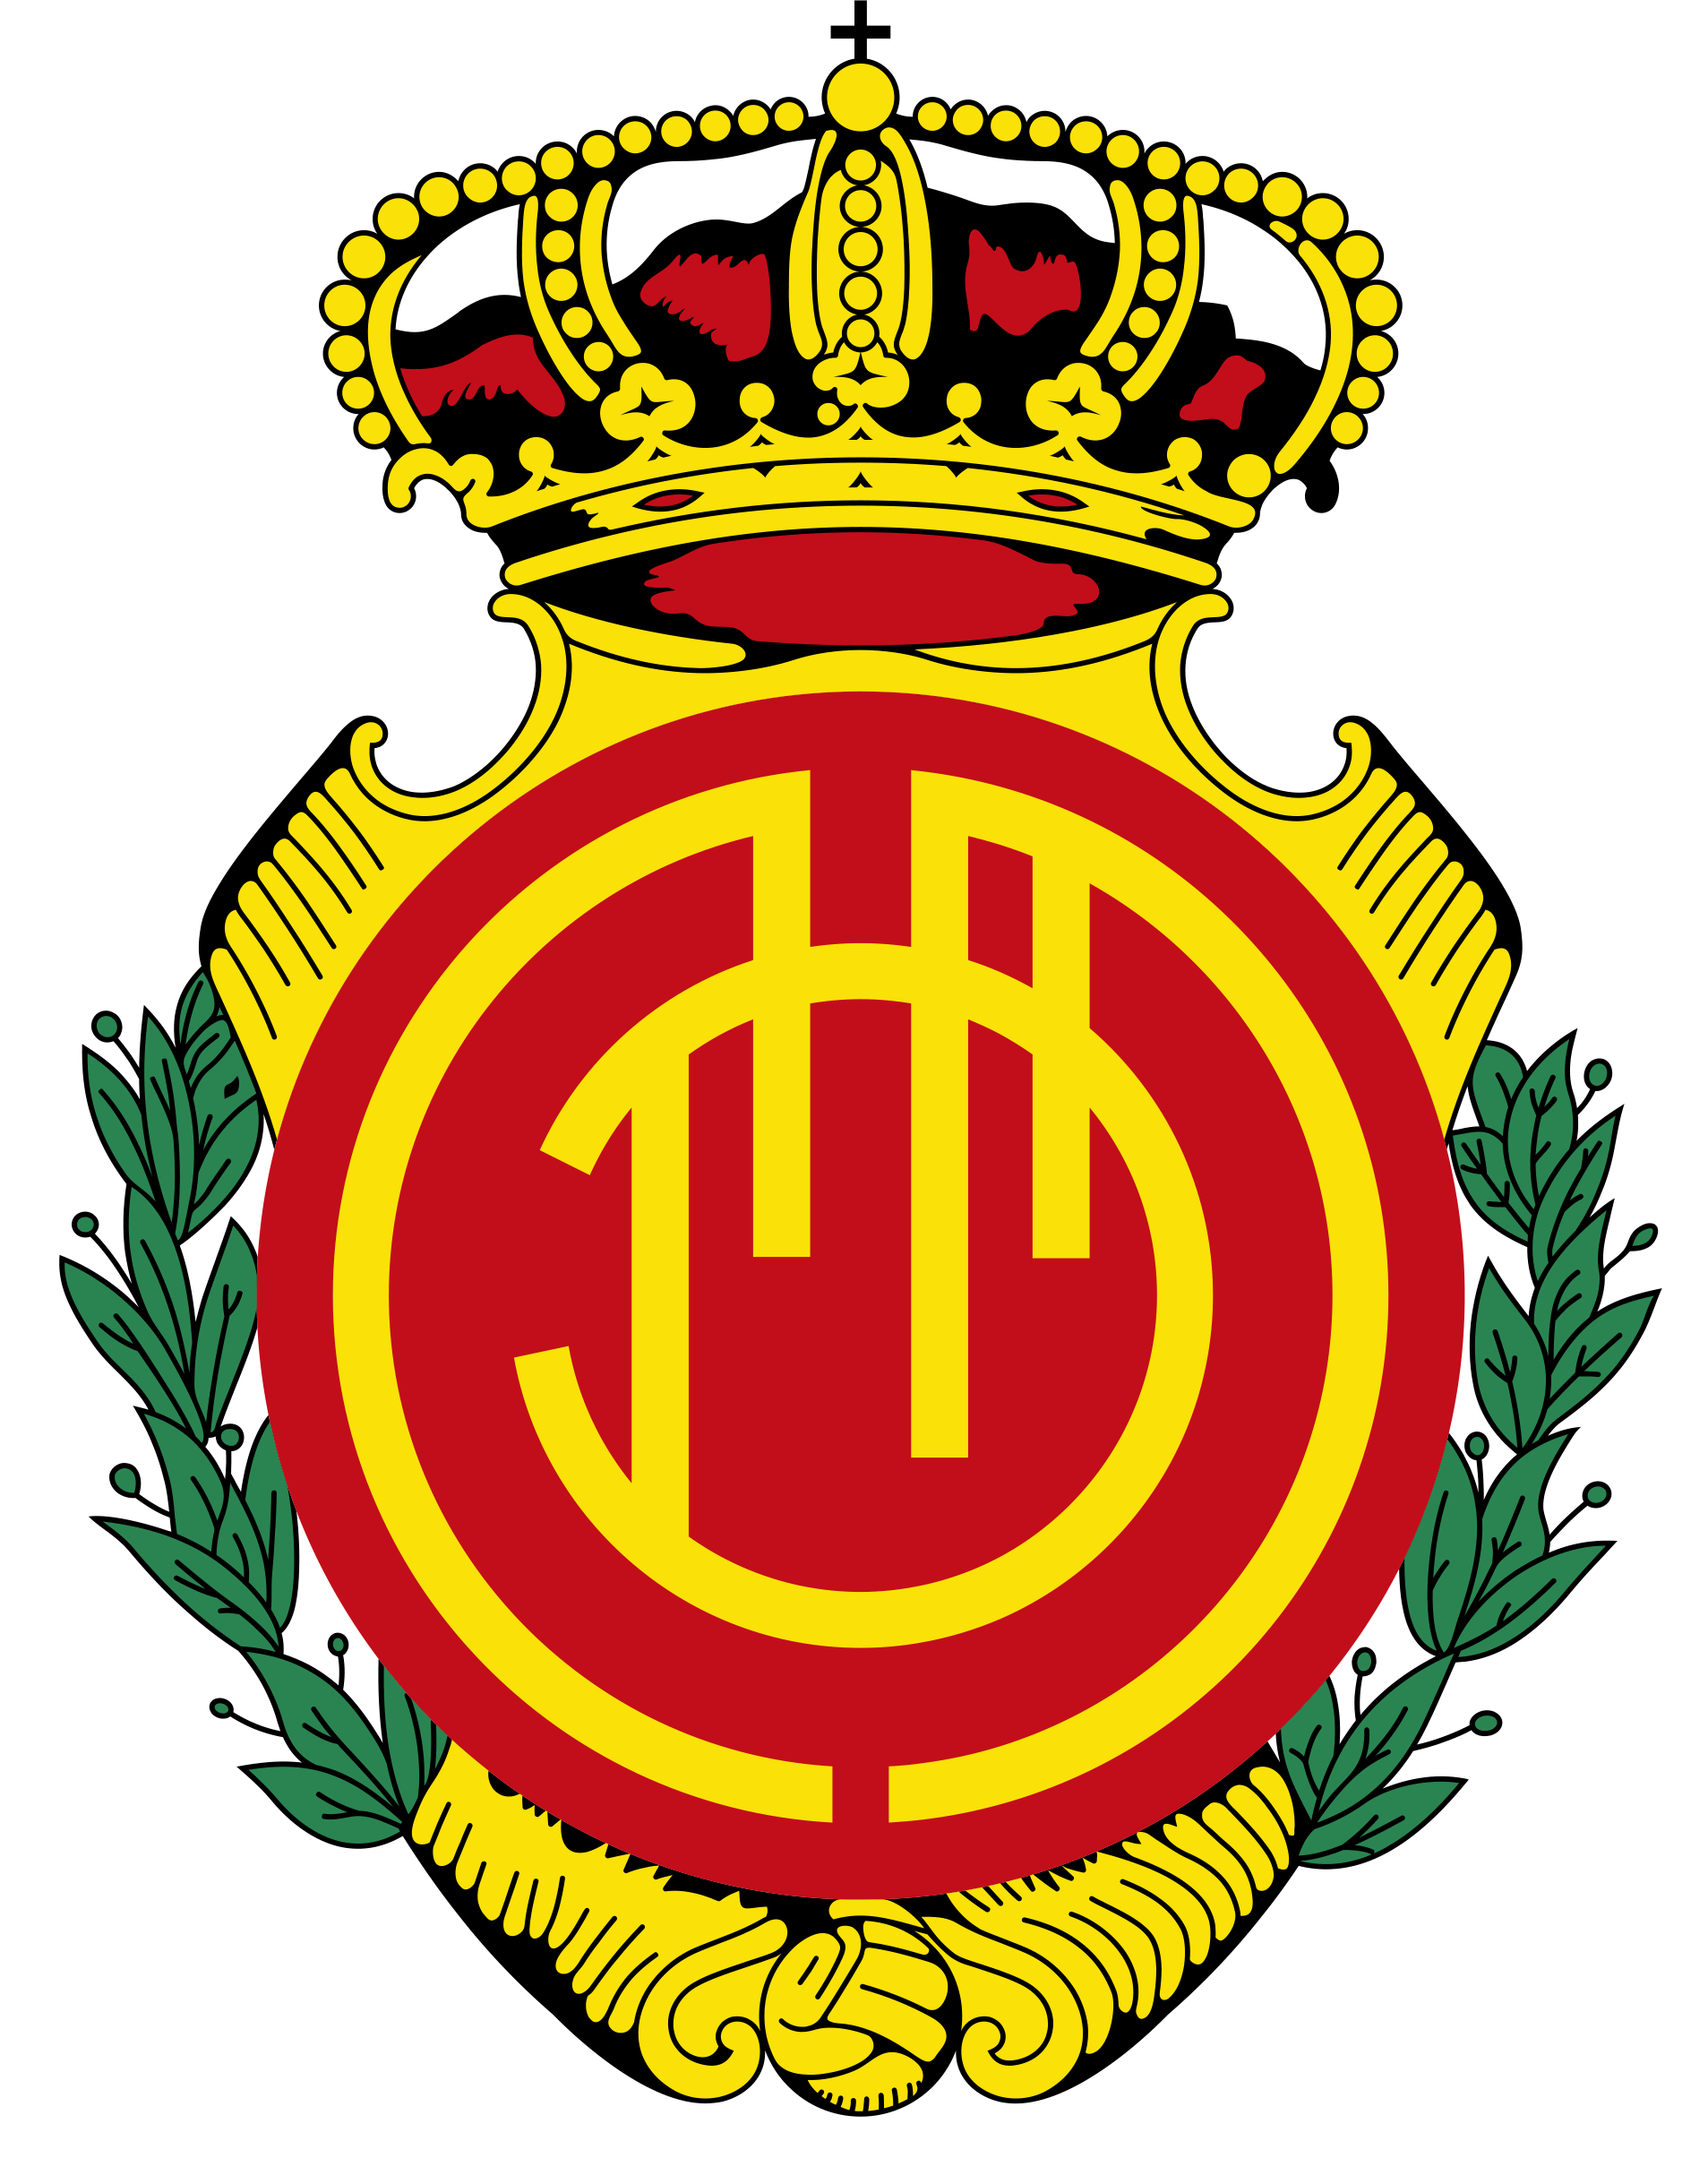 Real_Club_Deportivo_Mallorca.png